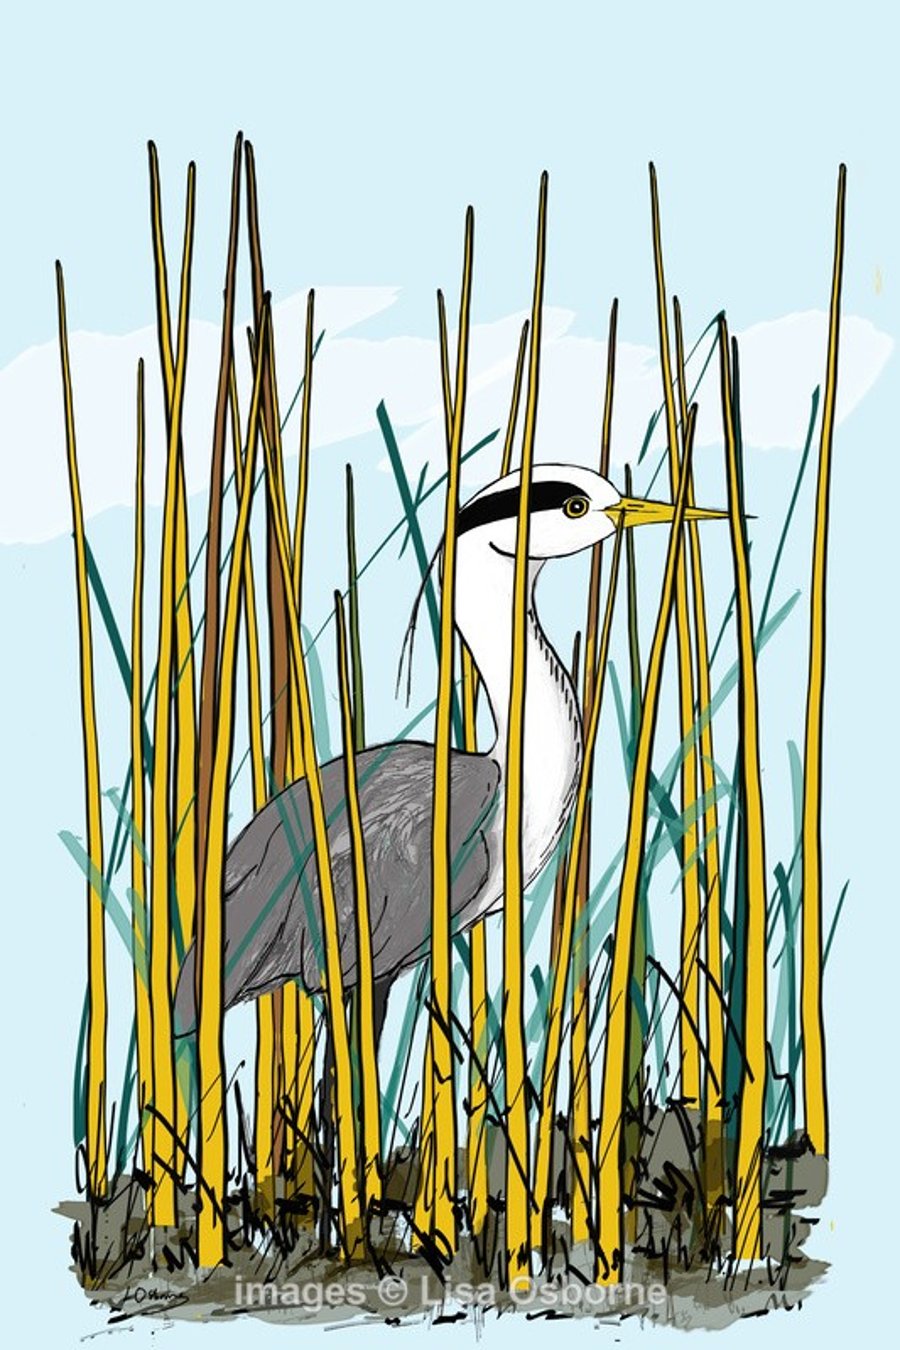 Heron in reeds. Signed print. Digital illustration. Birds. Wildlife